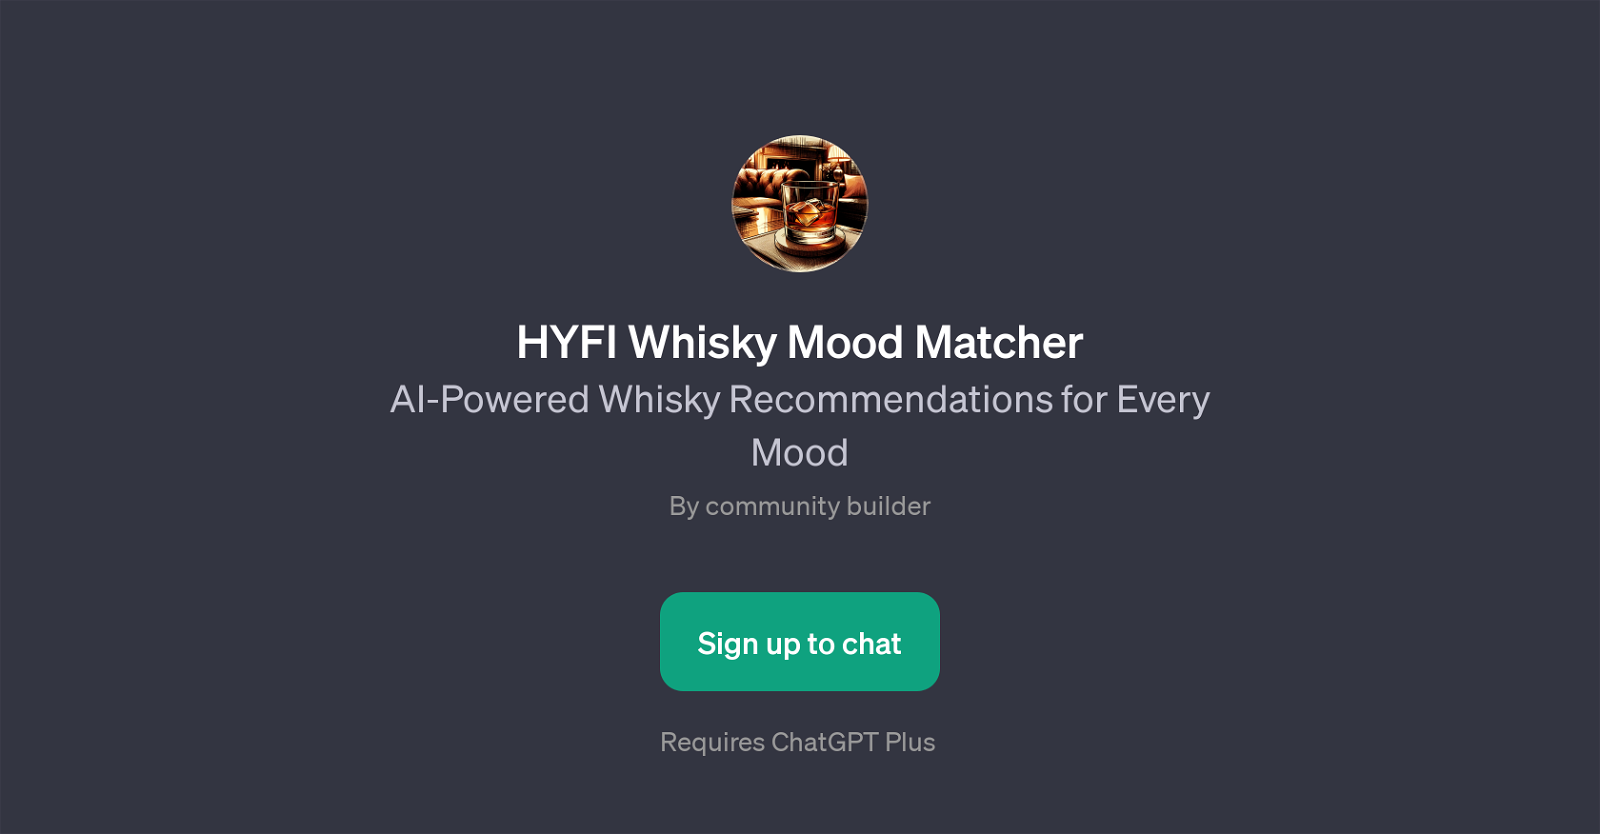 HYFI Whisky Mood Matcher website